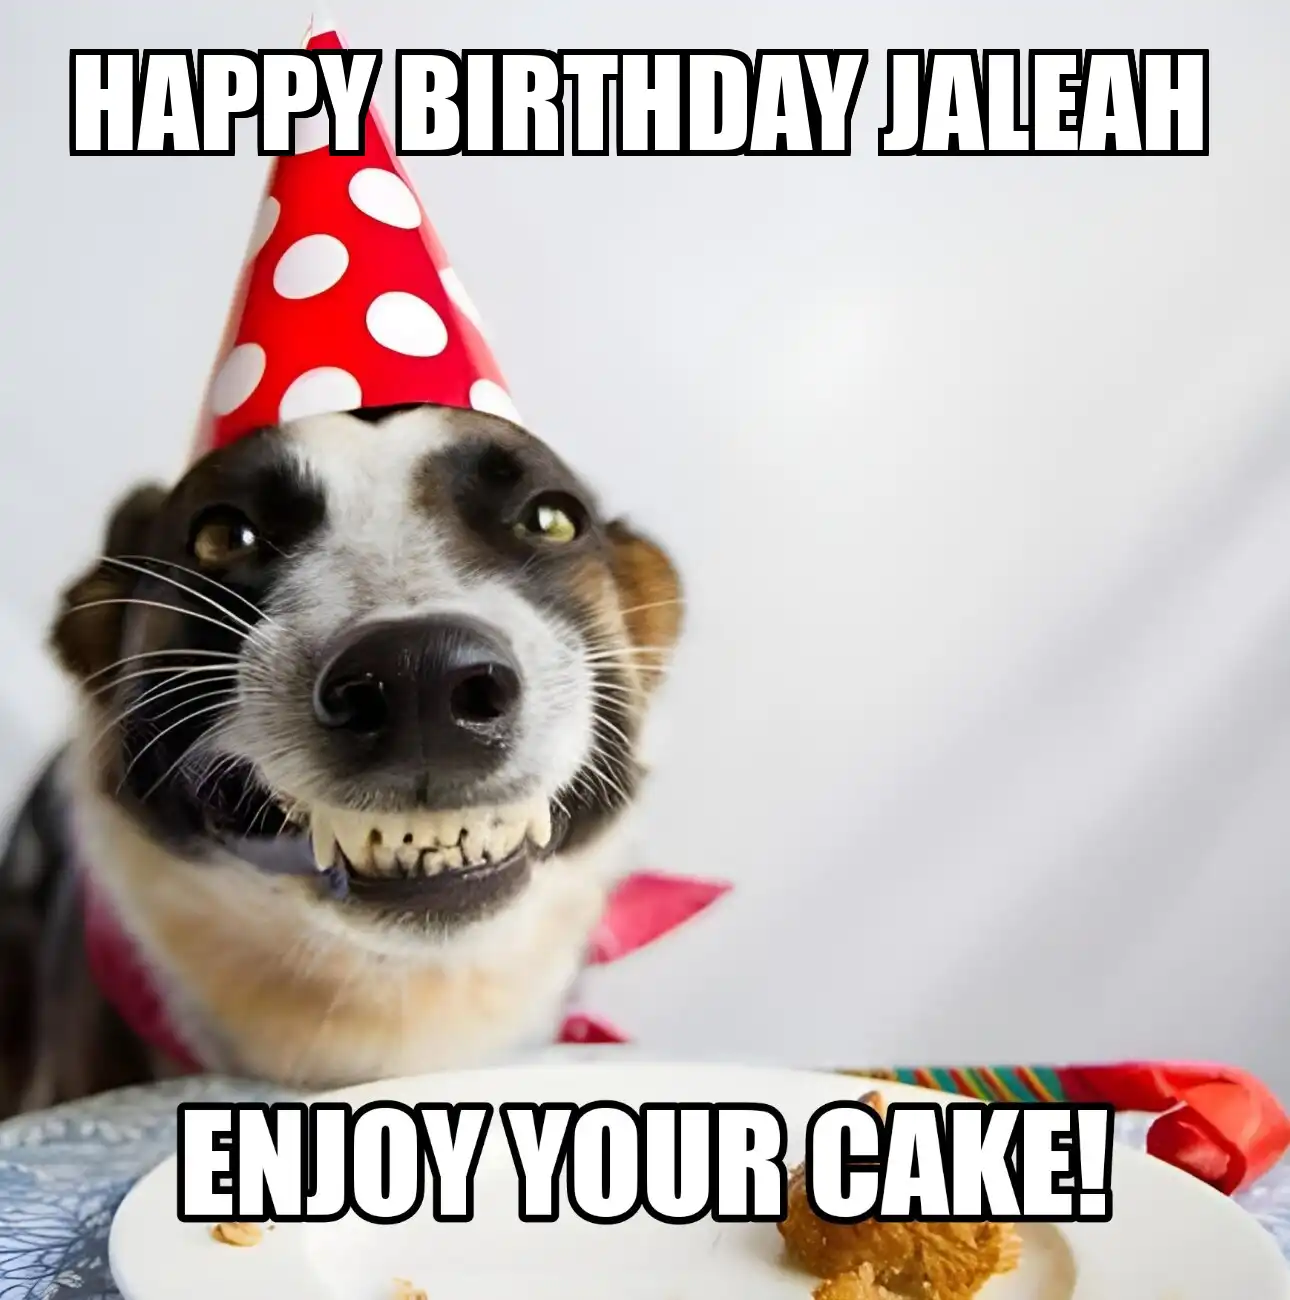 Happy Birthday Jaleah Enjoy Your Cake Dog Meme